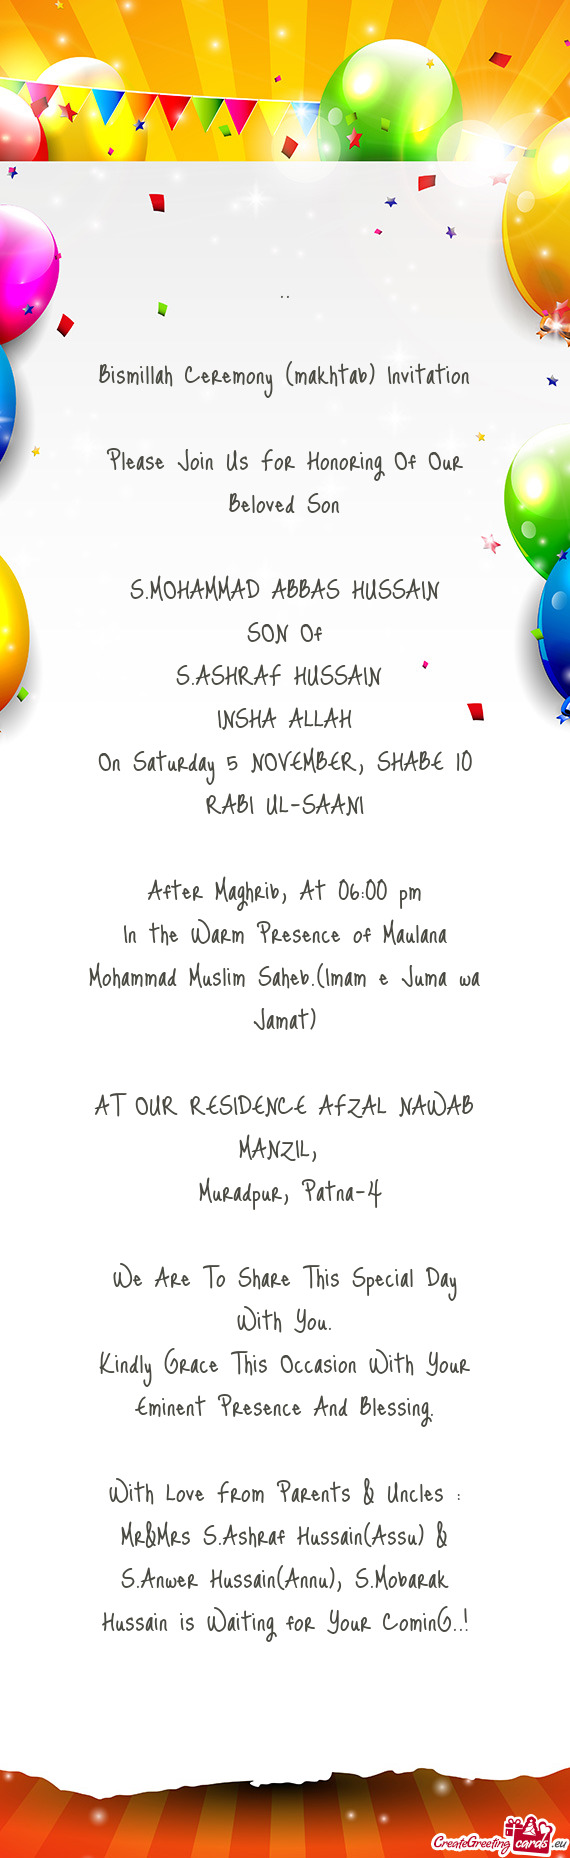 On Saturday 5 NOVEMBER, SHABE 10 RABI UL-SAANI